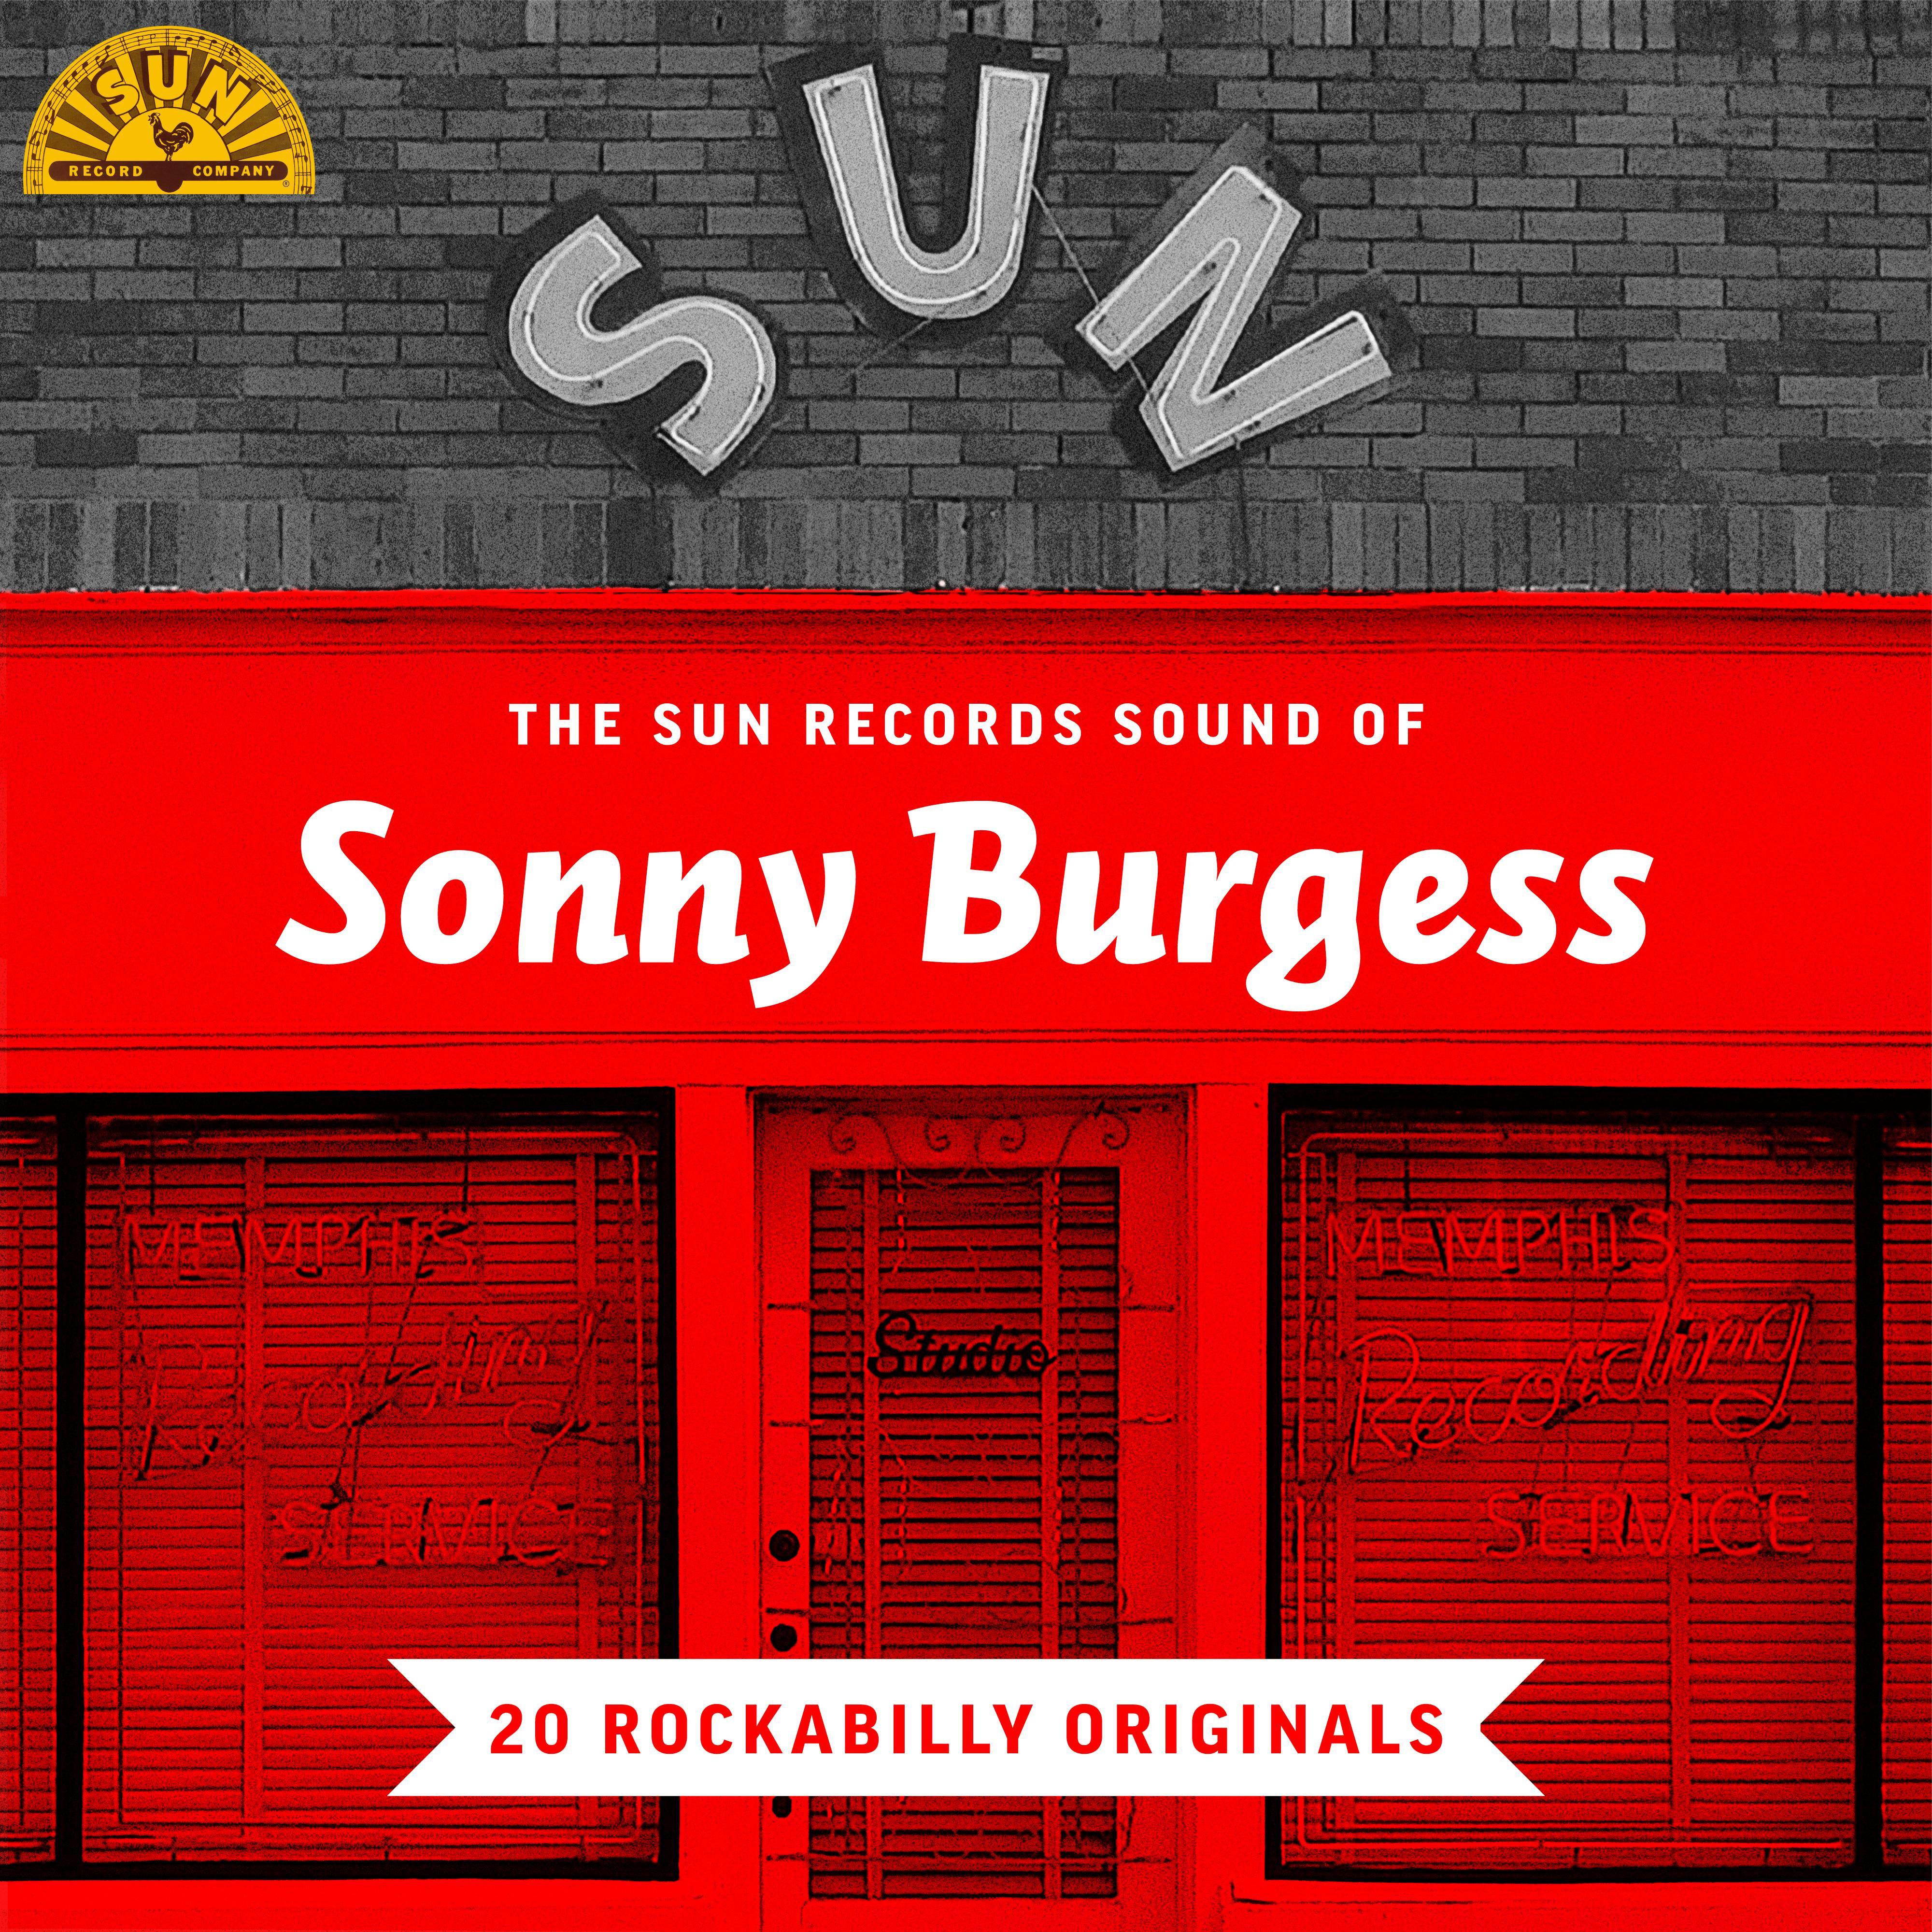 Sonny Burgess - Wings of an Angel (Prisoner's Song)